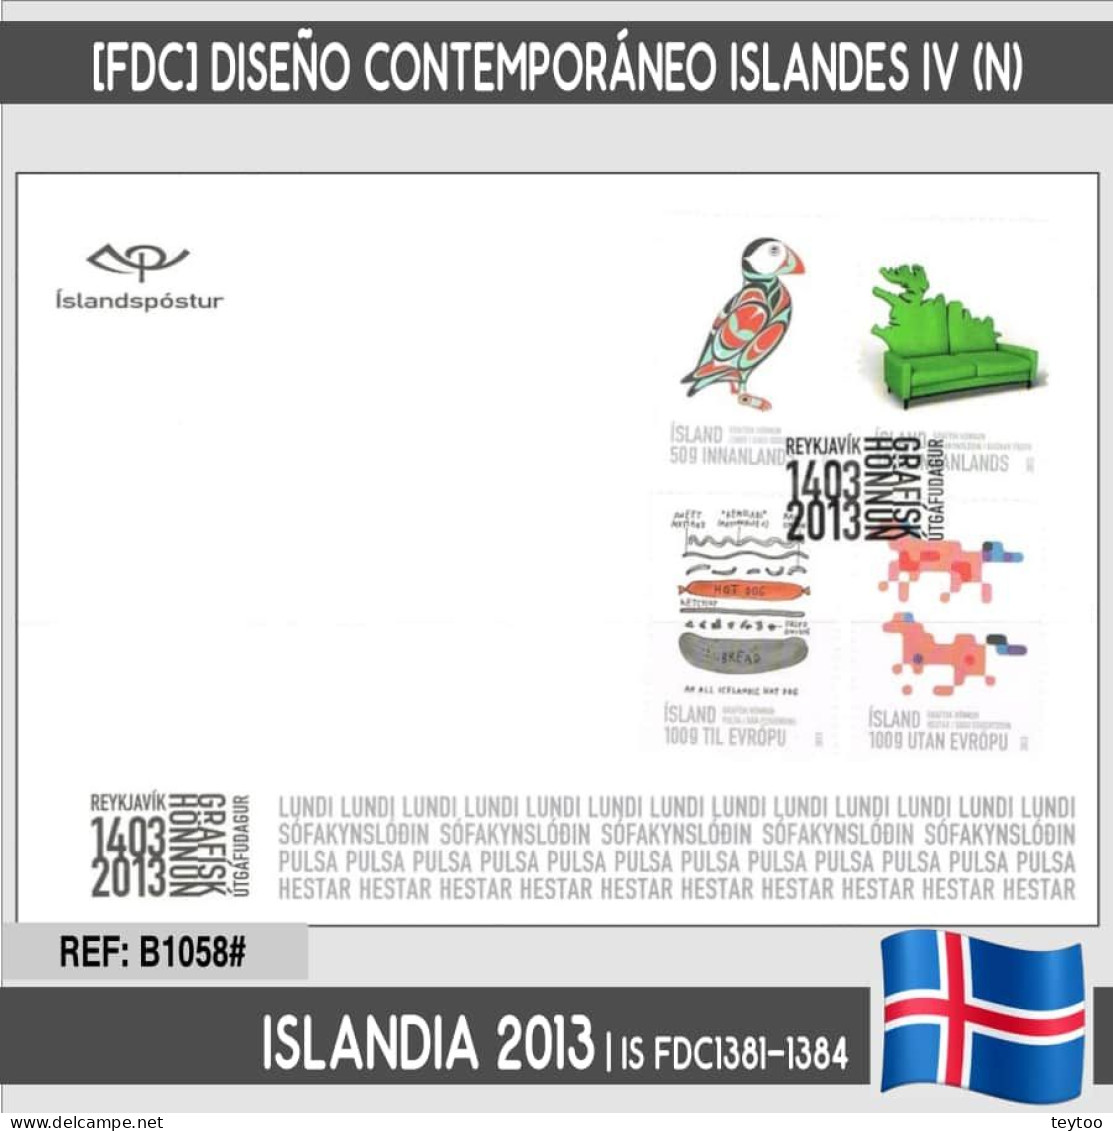 B1058# Islandia 2013 [FDC] Serie Diseño Gráfico Islandés Contemporáneo IV (N) - FDC